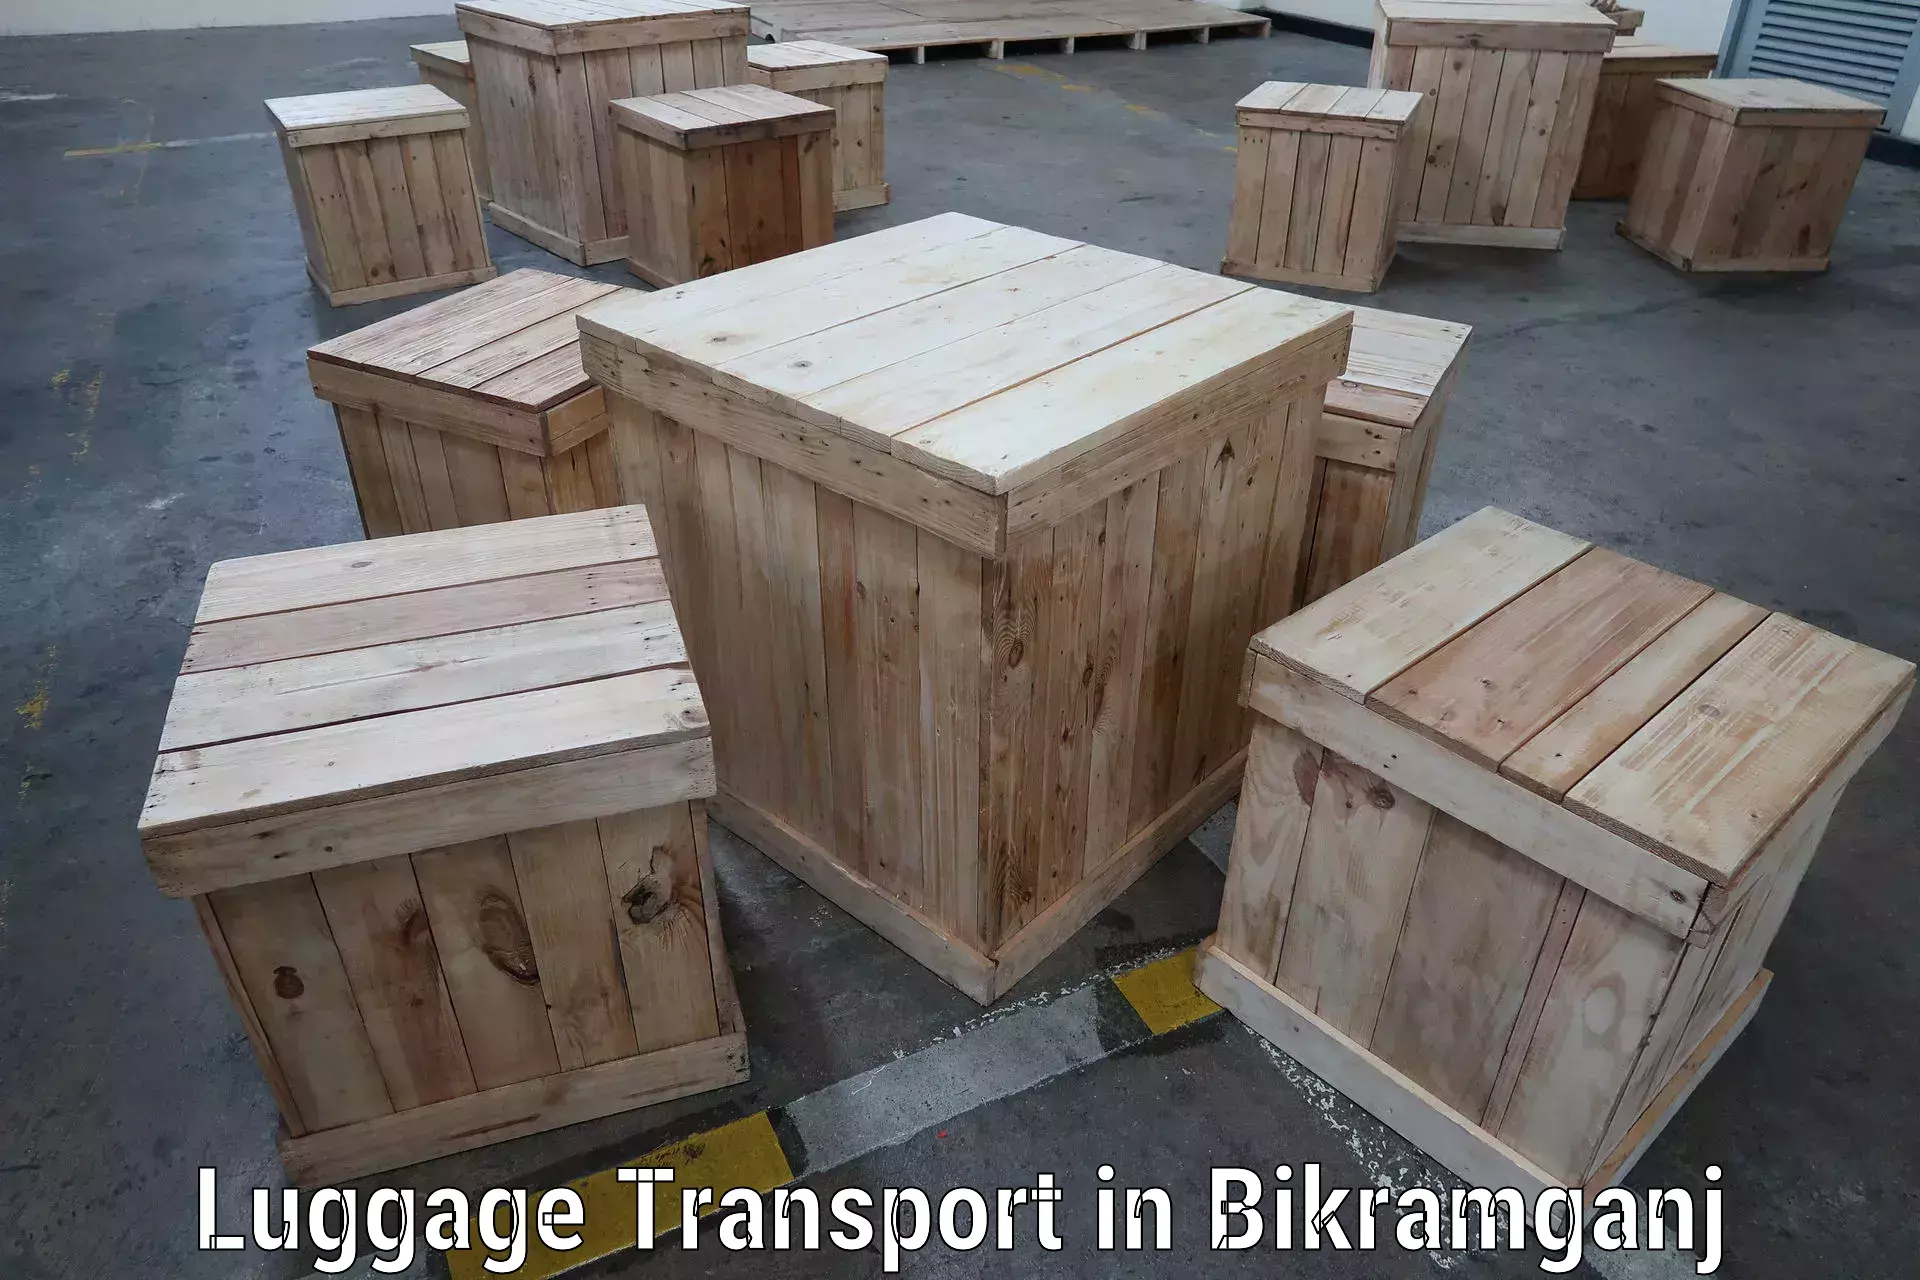 Express luggage delivery in Bikramganj